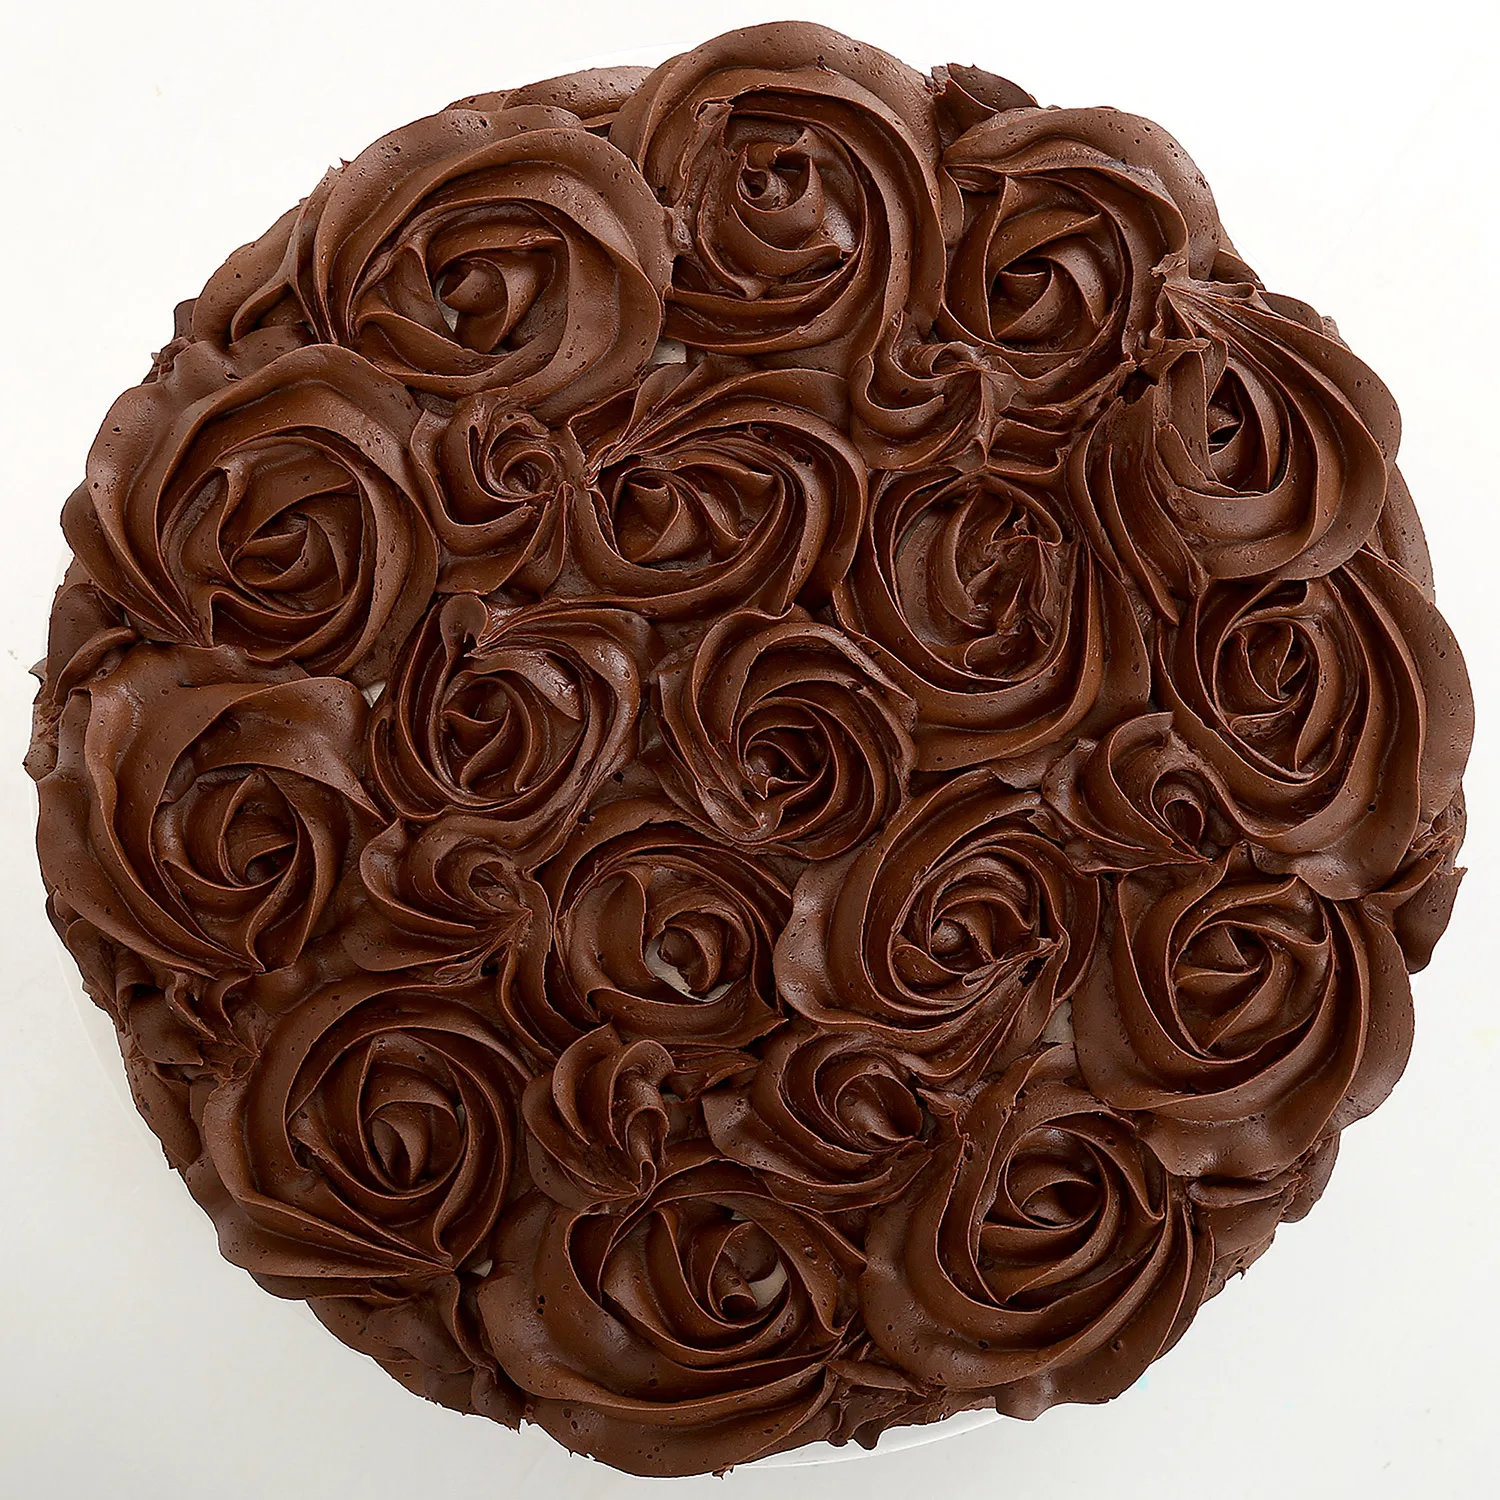 Chocolaty Rose Cake - 1 KG